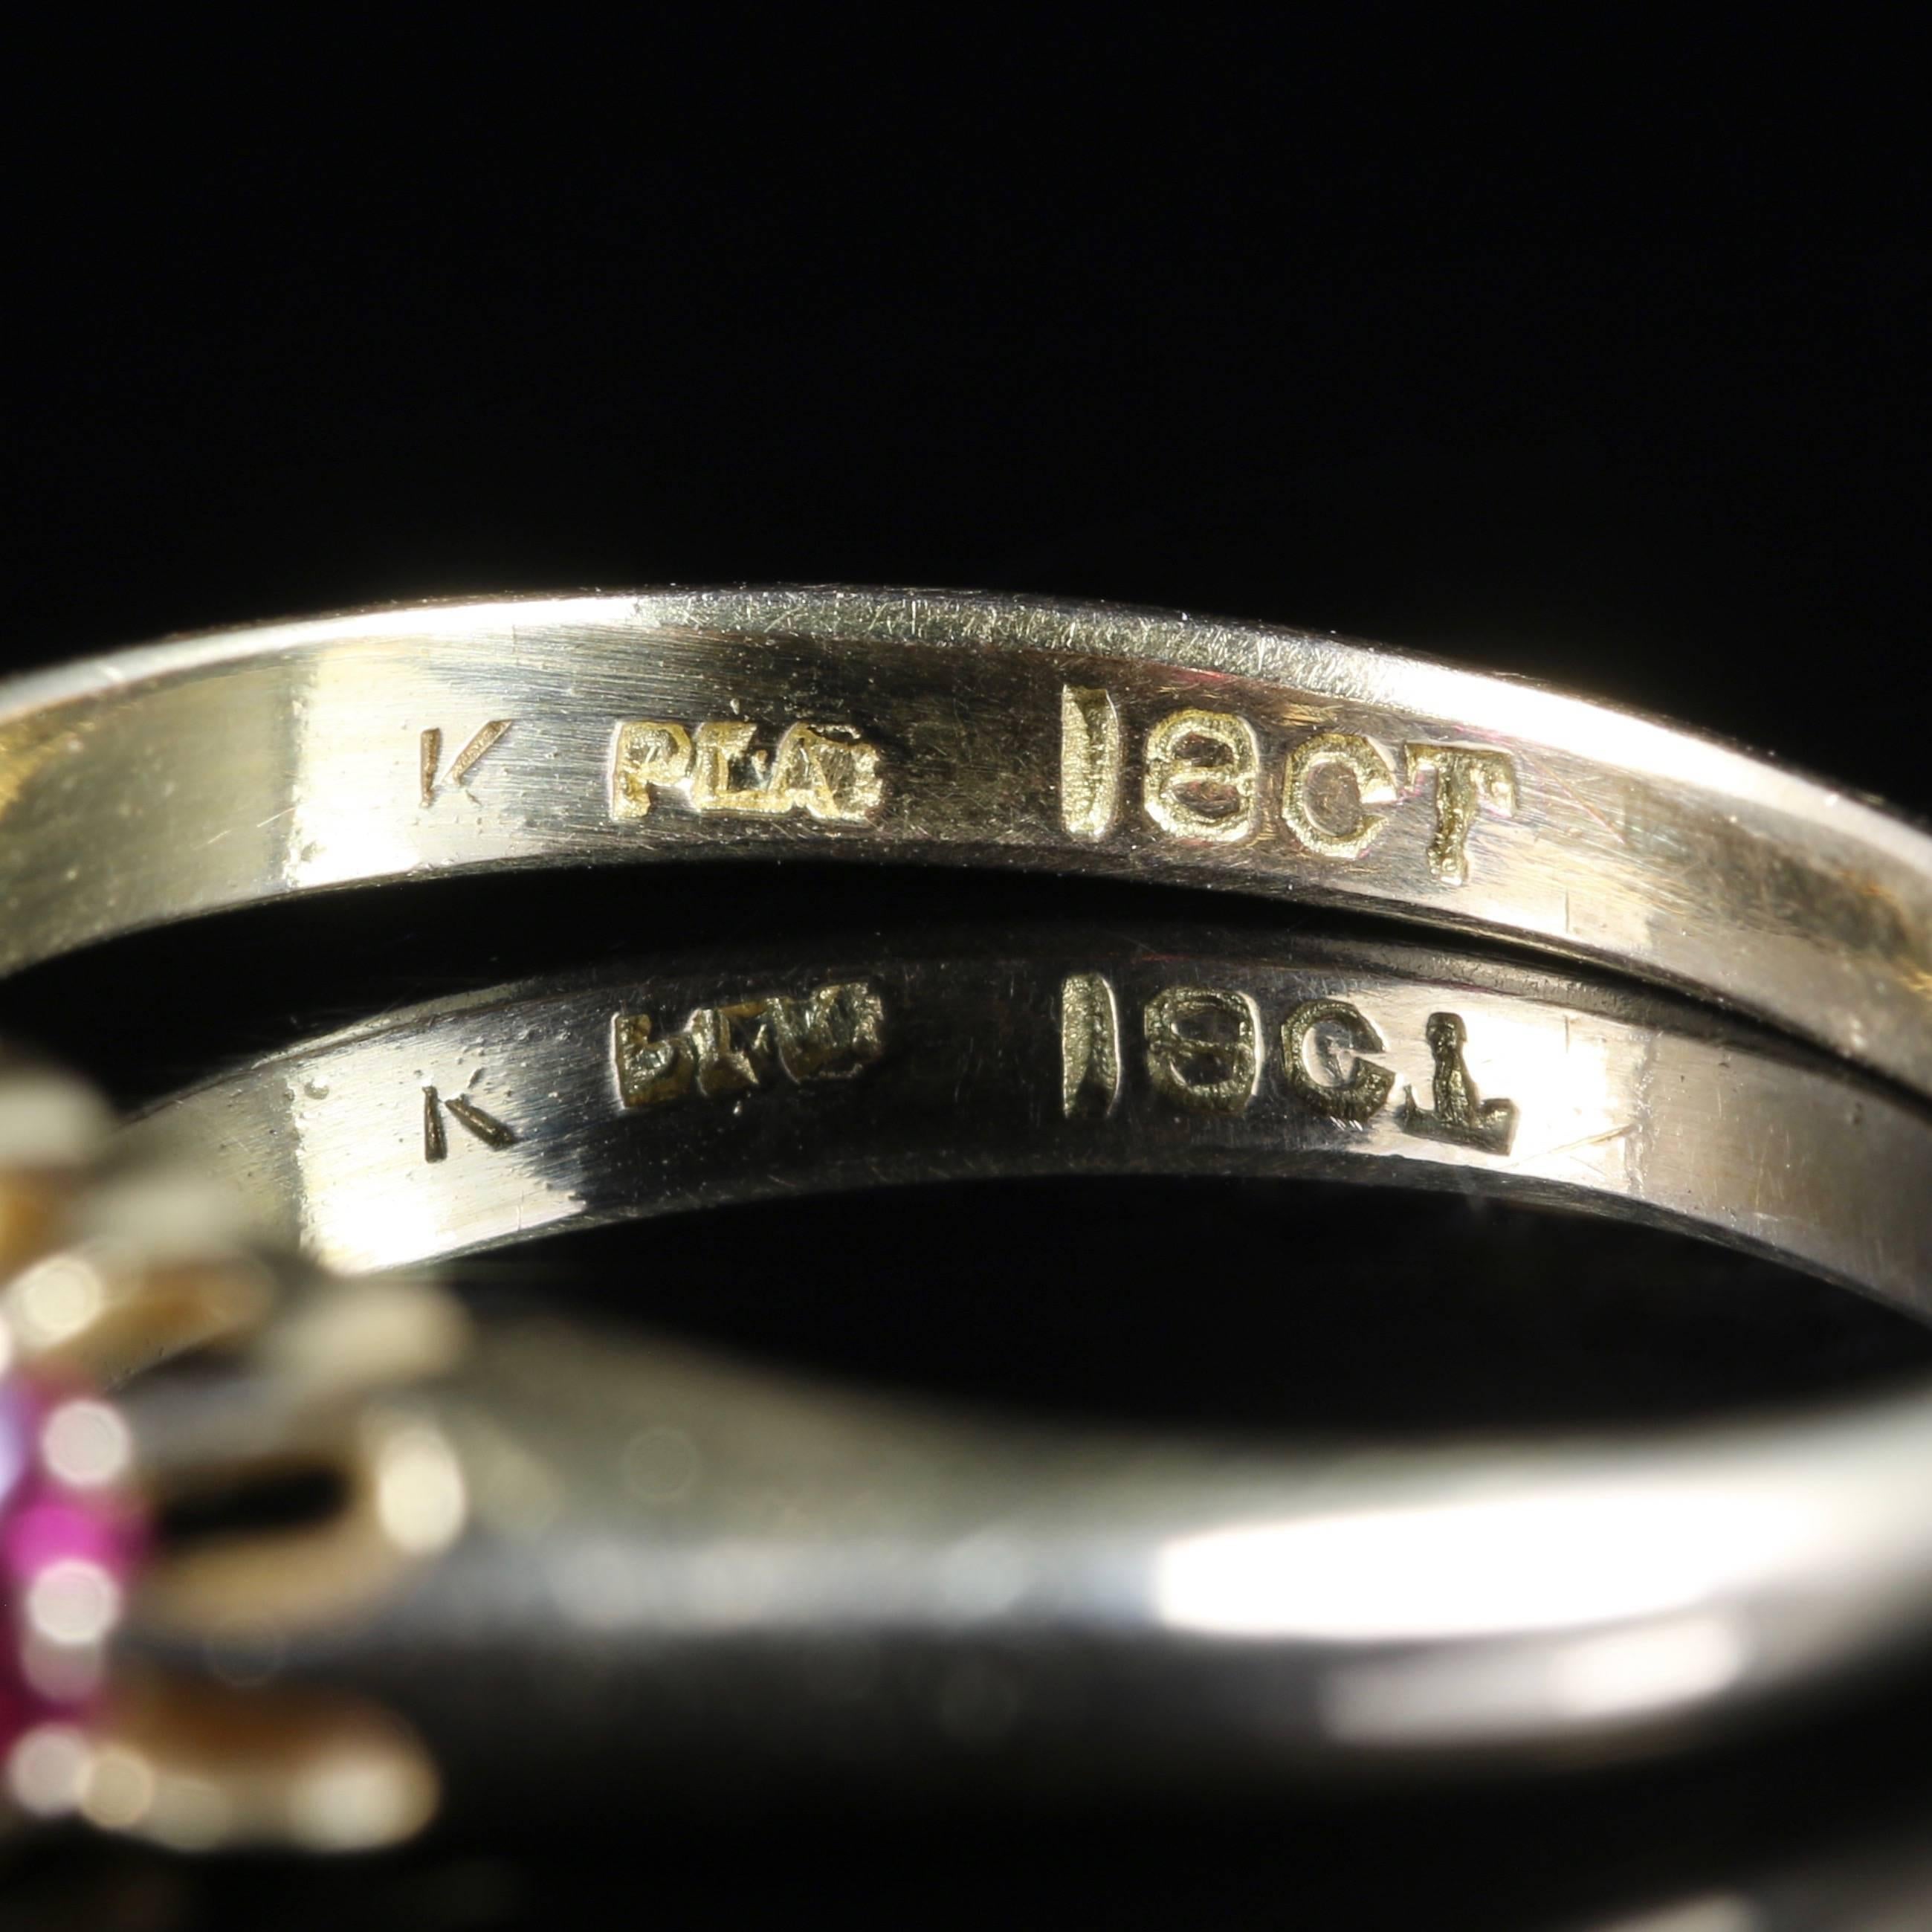 Antique Victorian Ruby Diamond Ring 18 Carat Gold, circa 1900 2